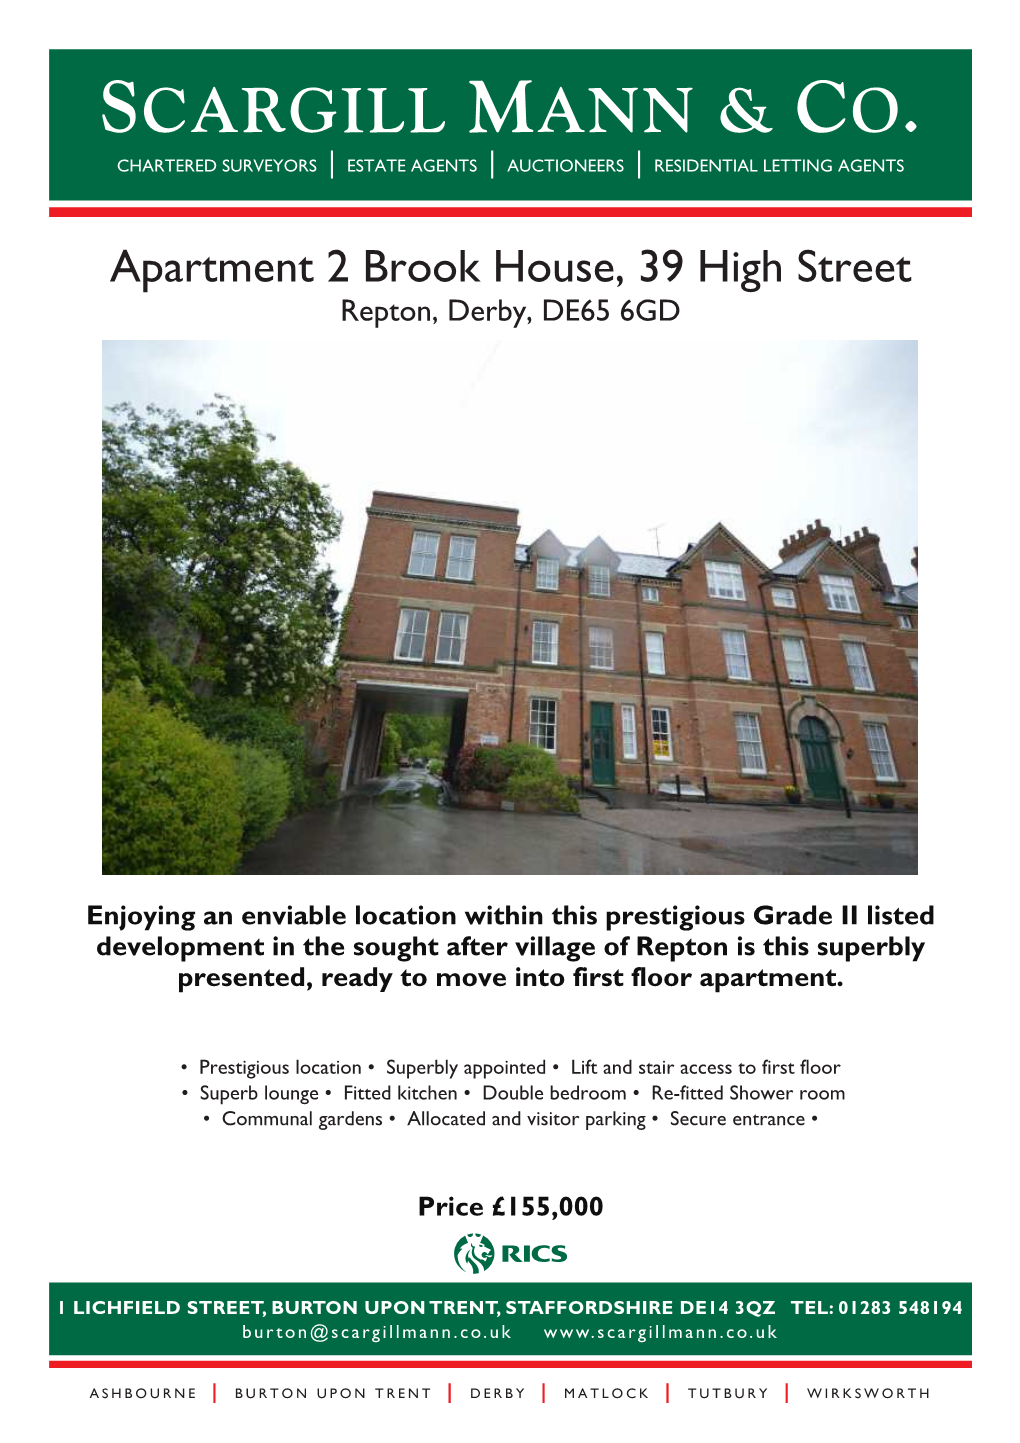 Apartment 2 Brook House, 39 High Street Repton, Derby, DE65 6GD